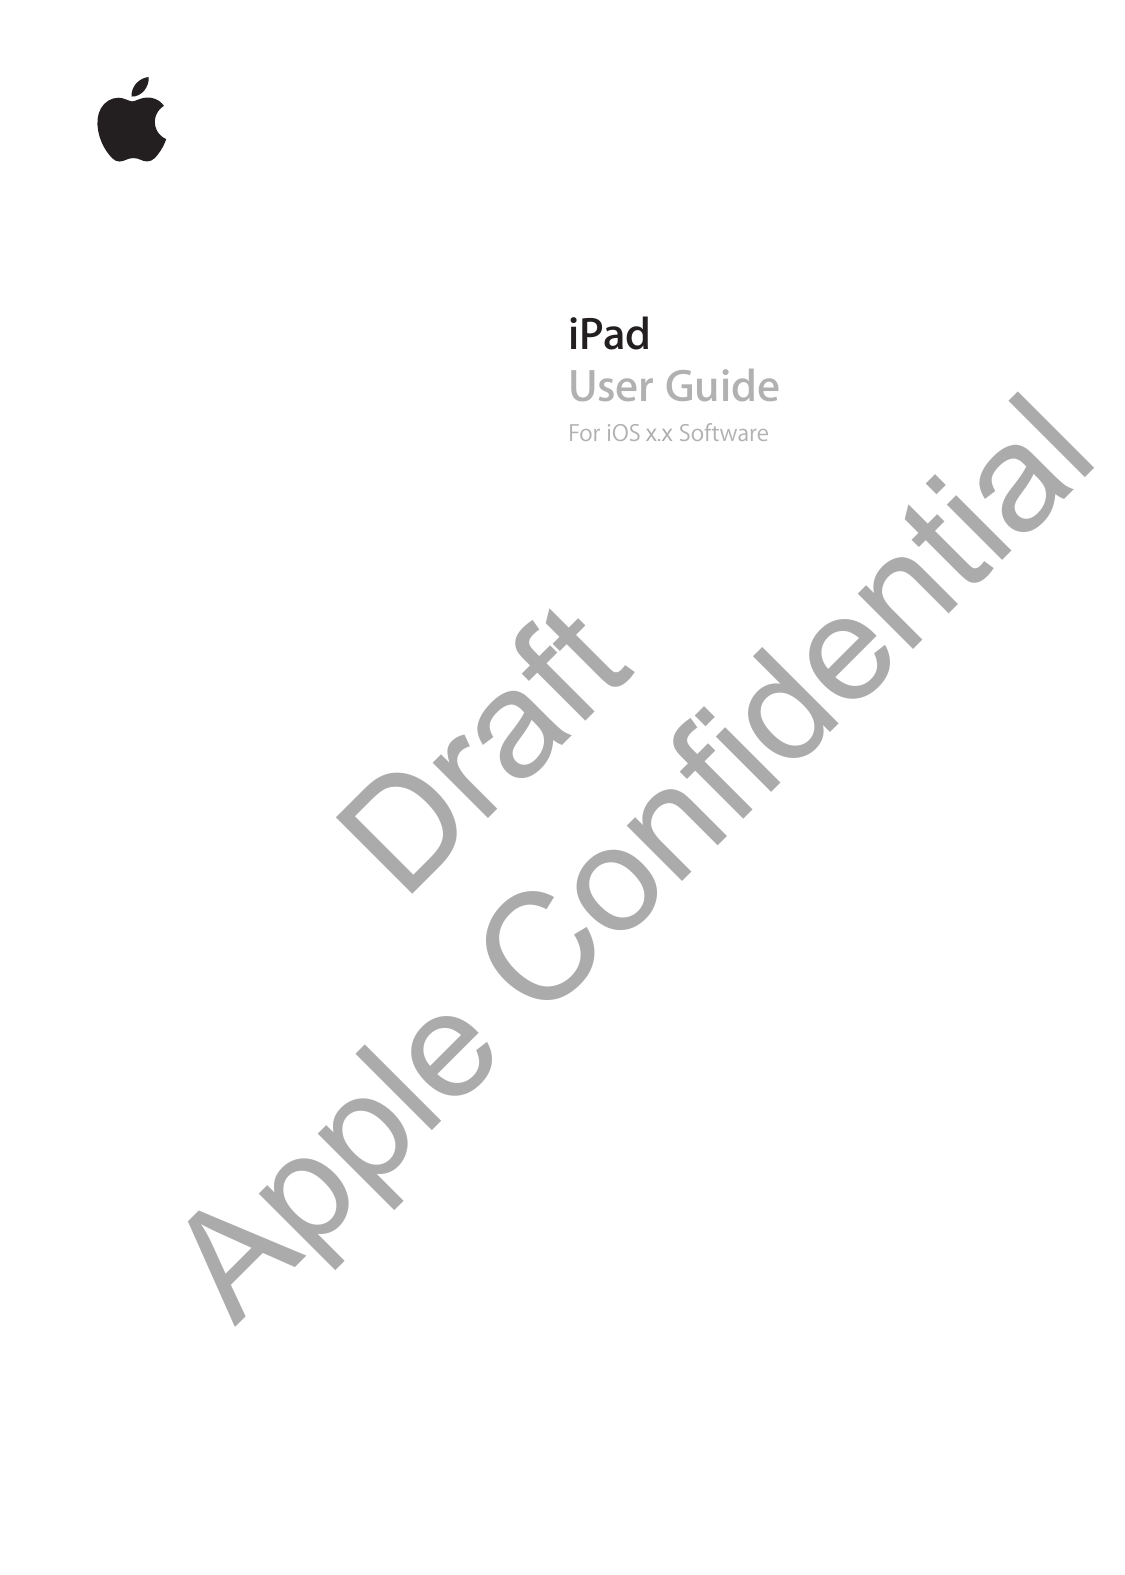 iPadUser GuideFor iOS   Software          Draft  Apple Confidential X.X